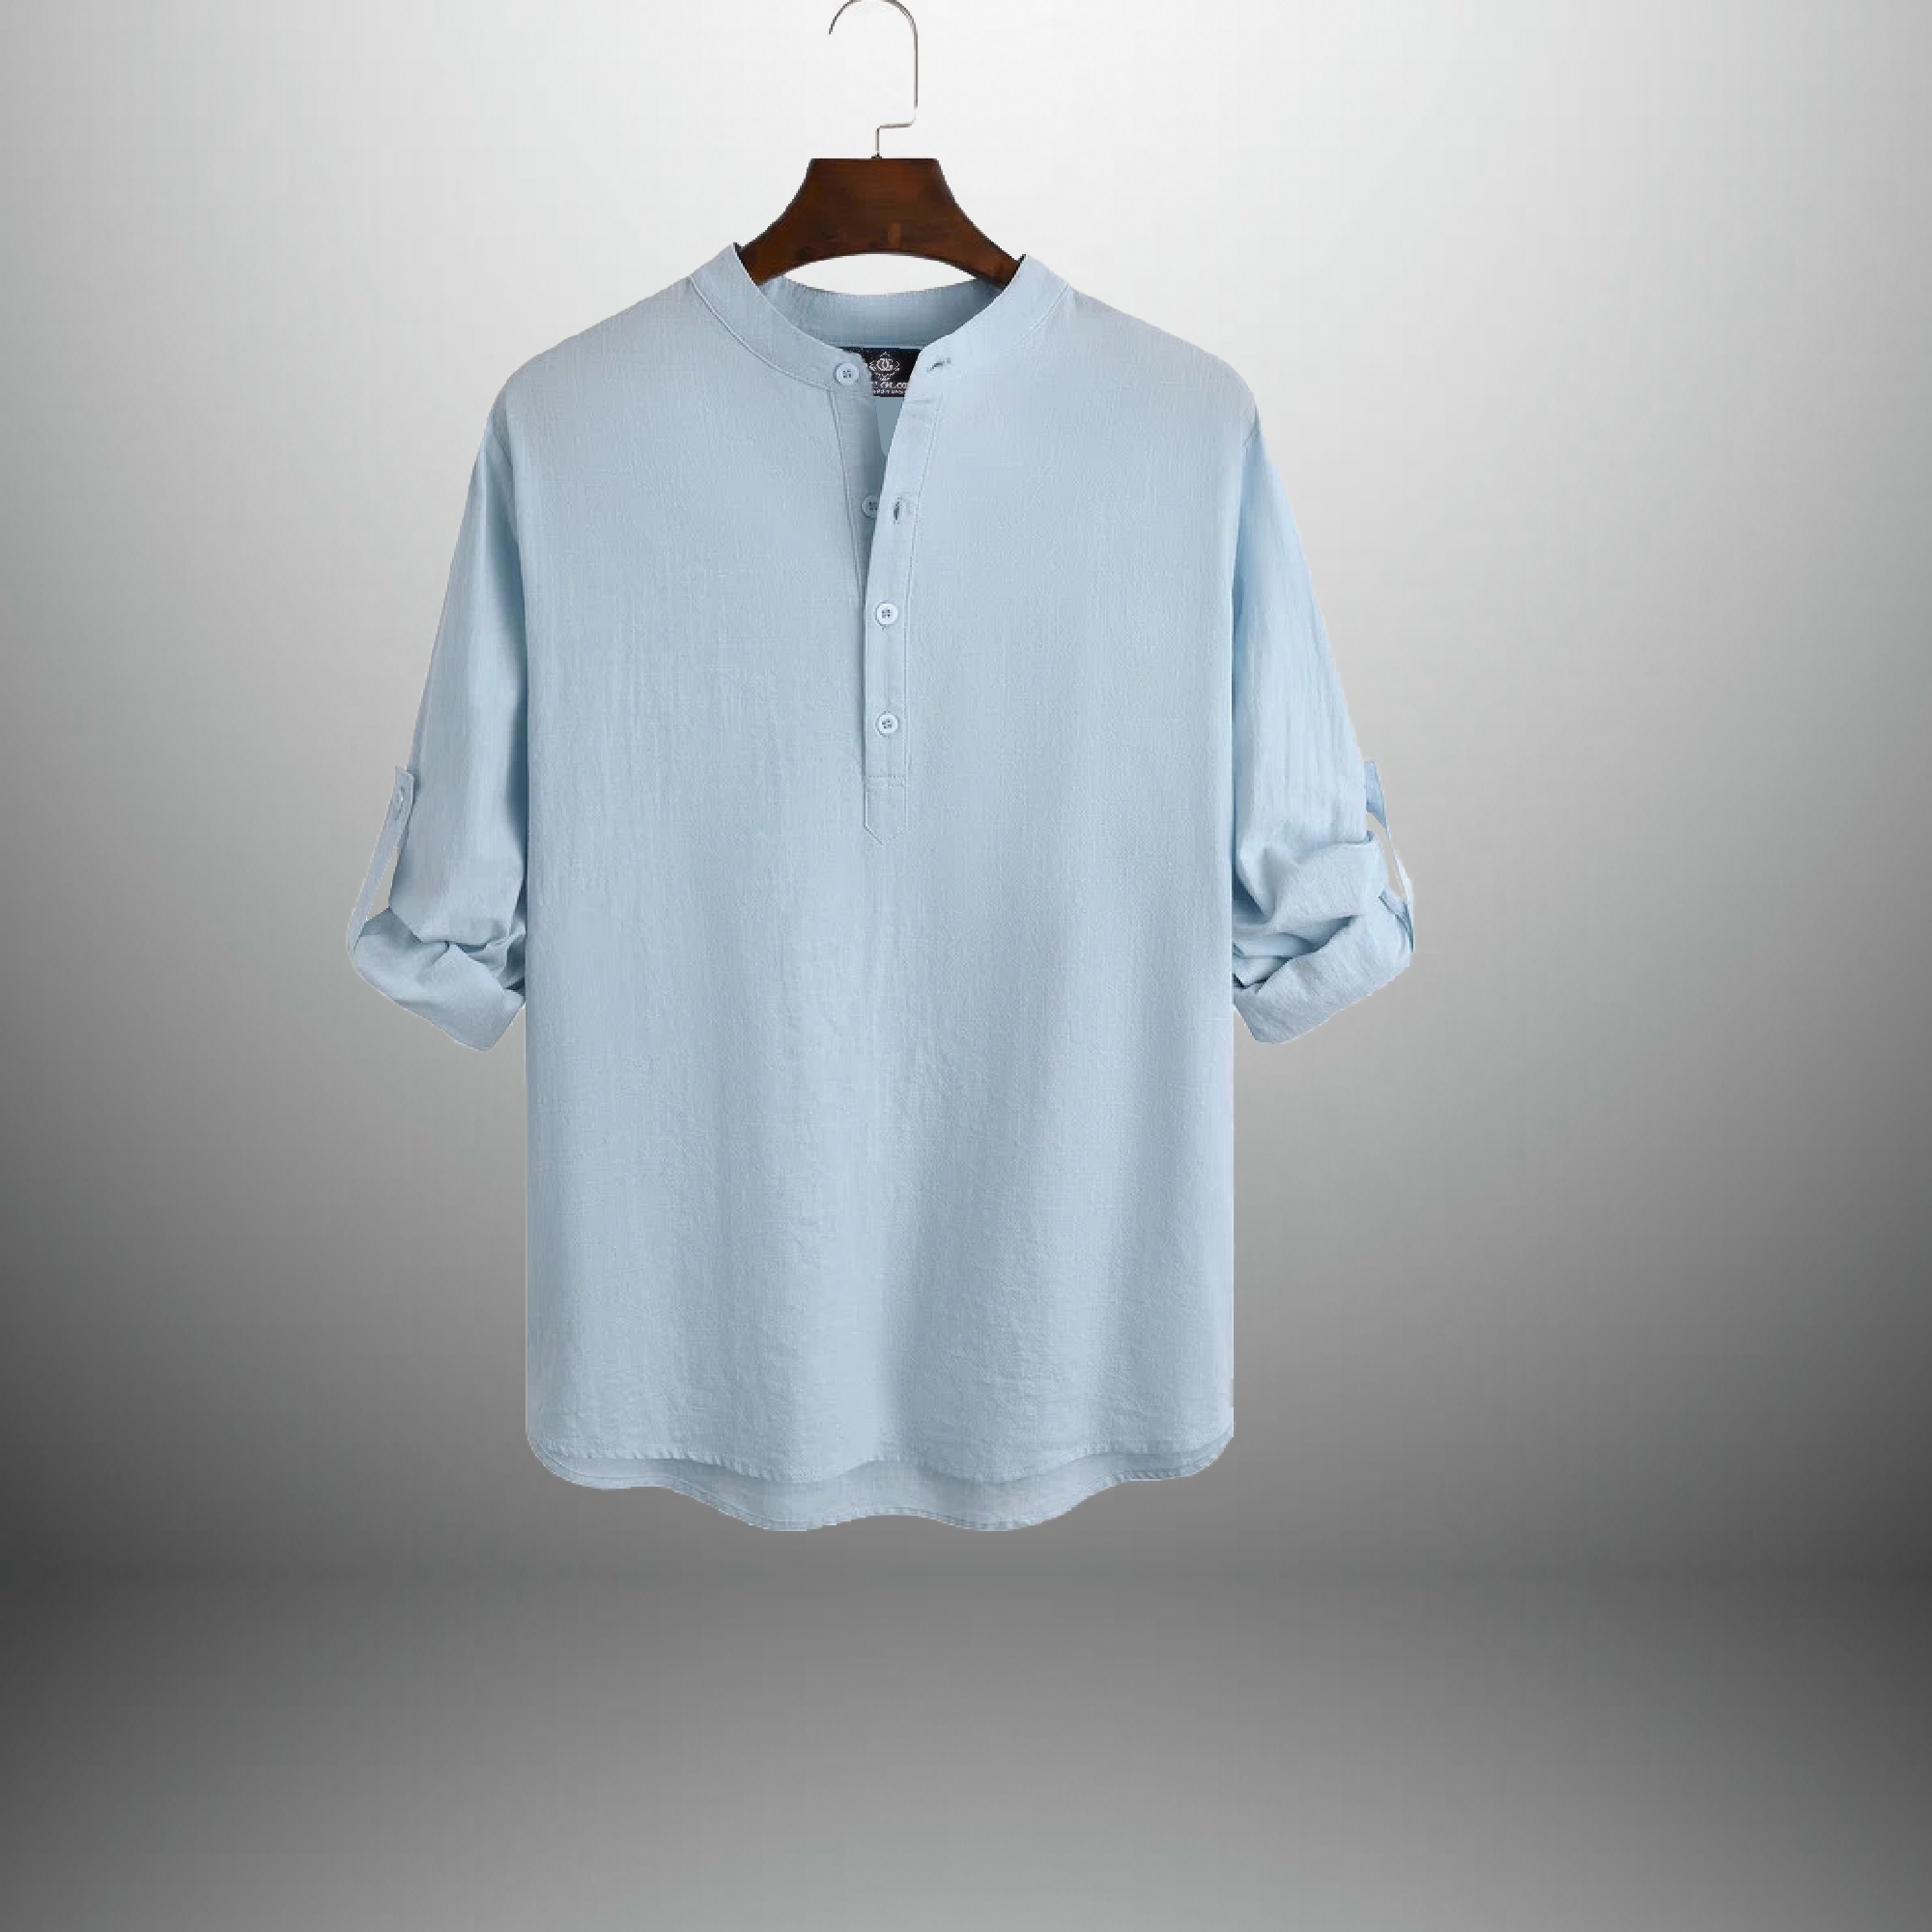 Men's light blue Full sleeve kurta style shirt-RMS003